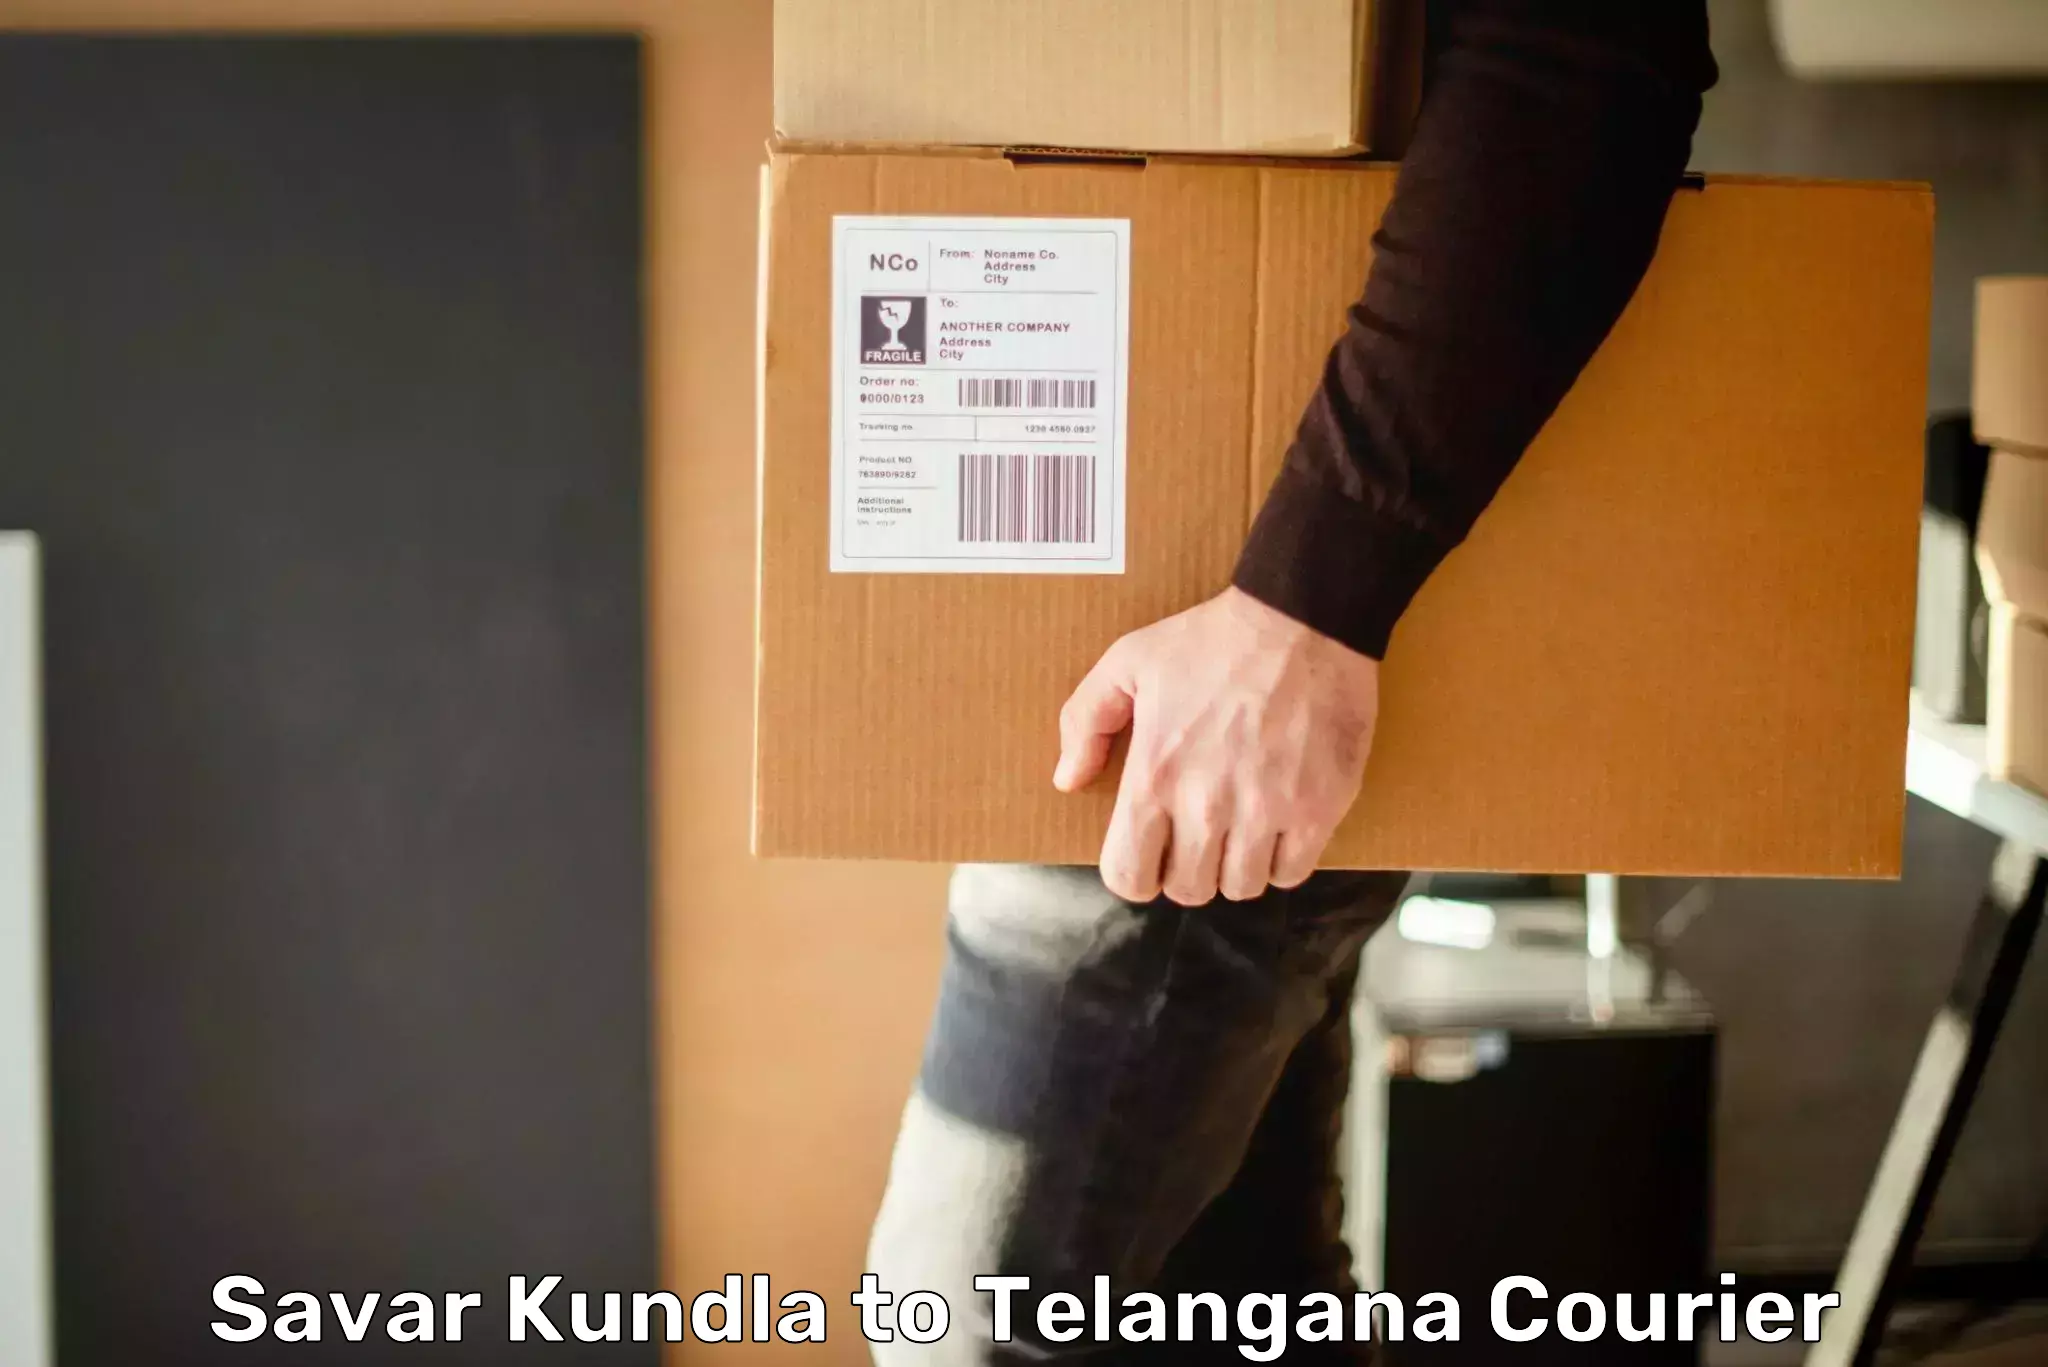 State-of-the-art courier technology Savar Kundla to Telangana